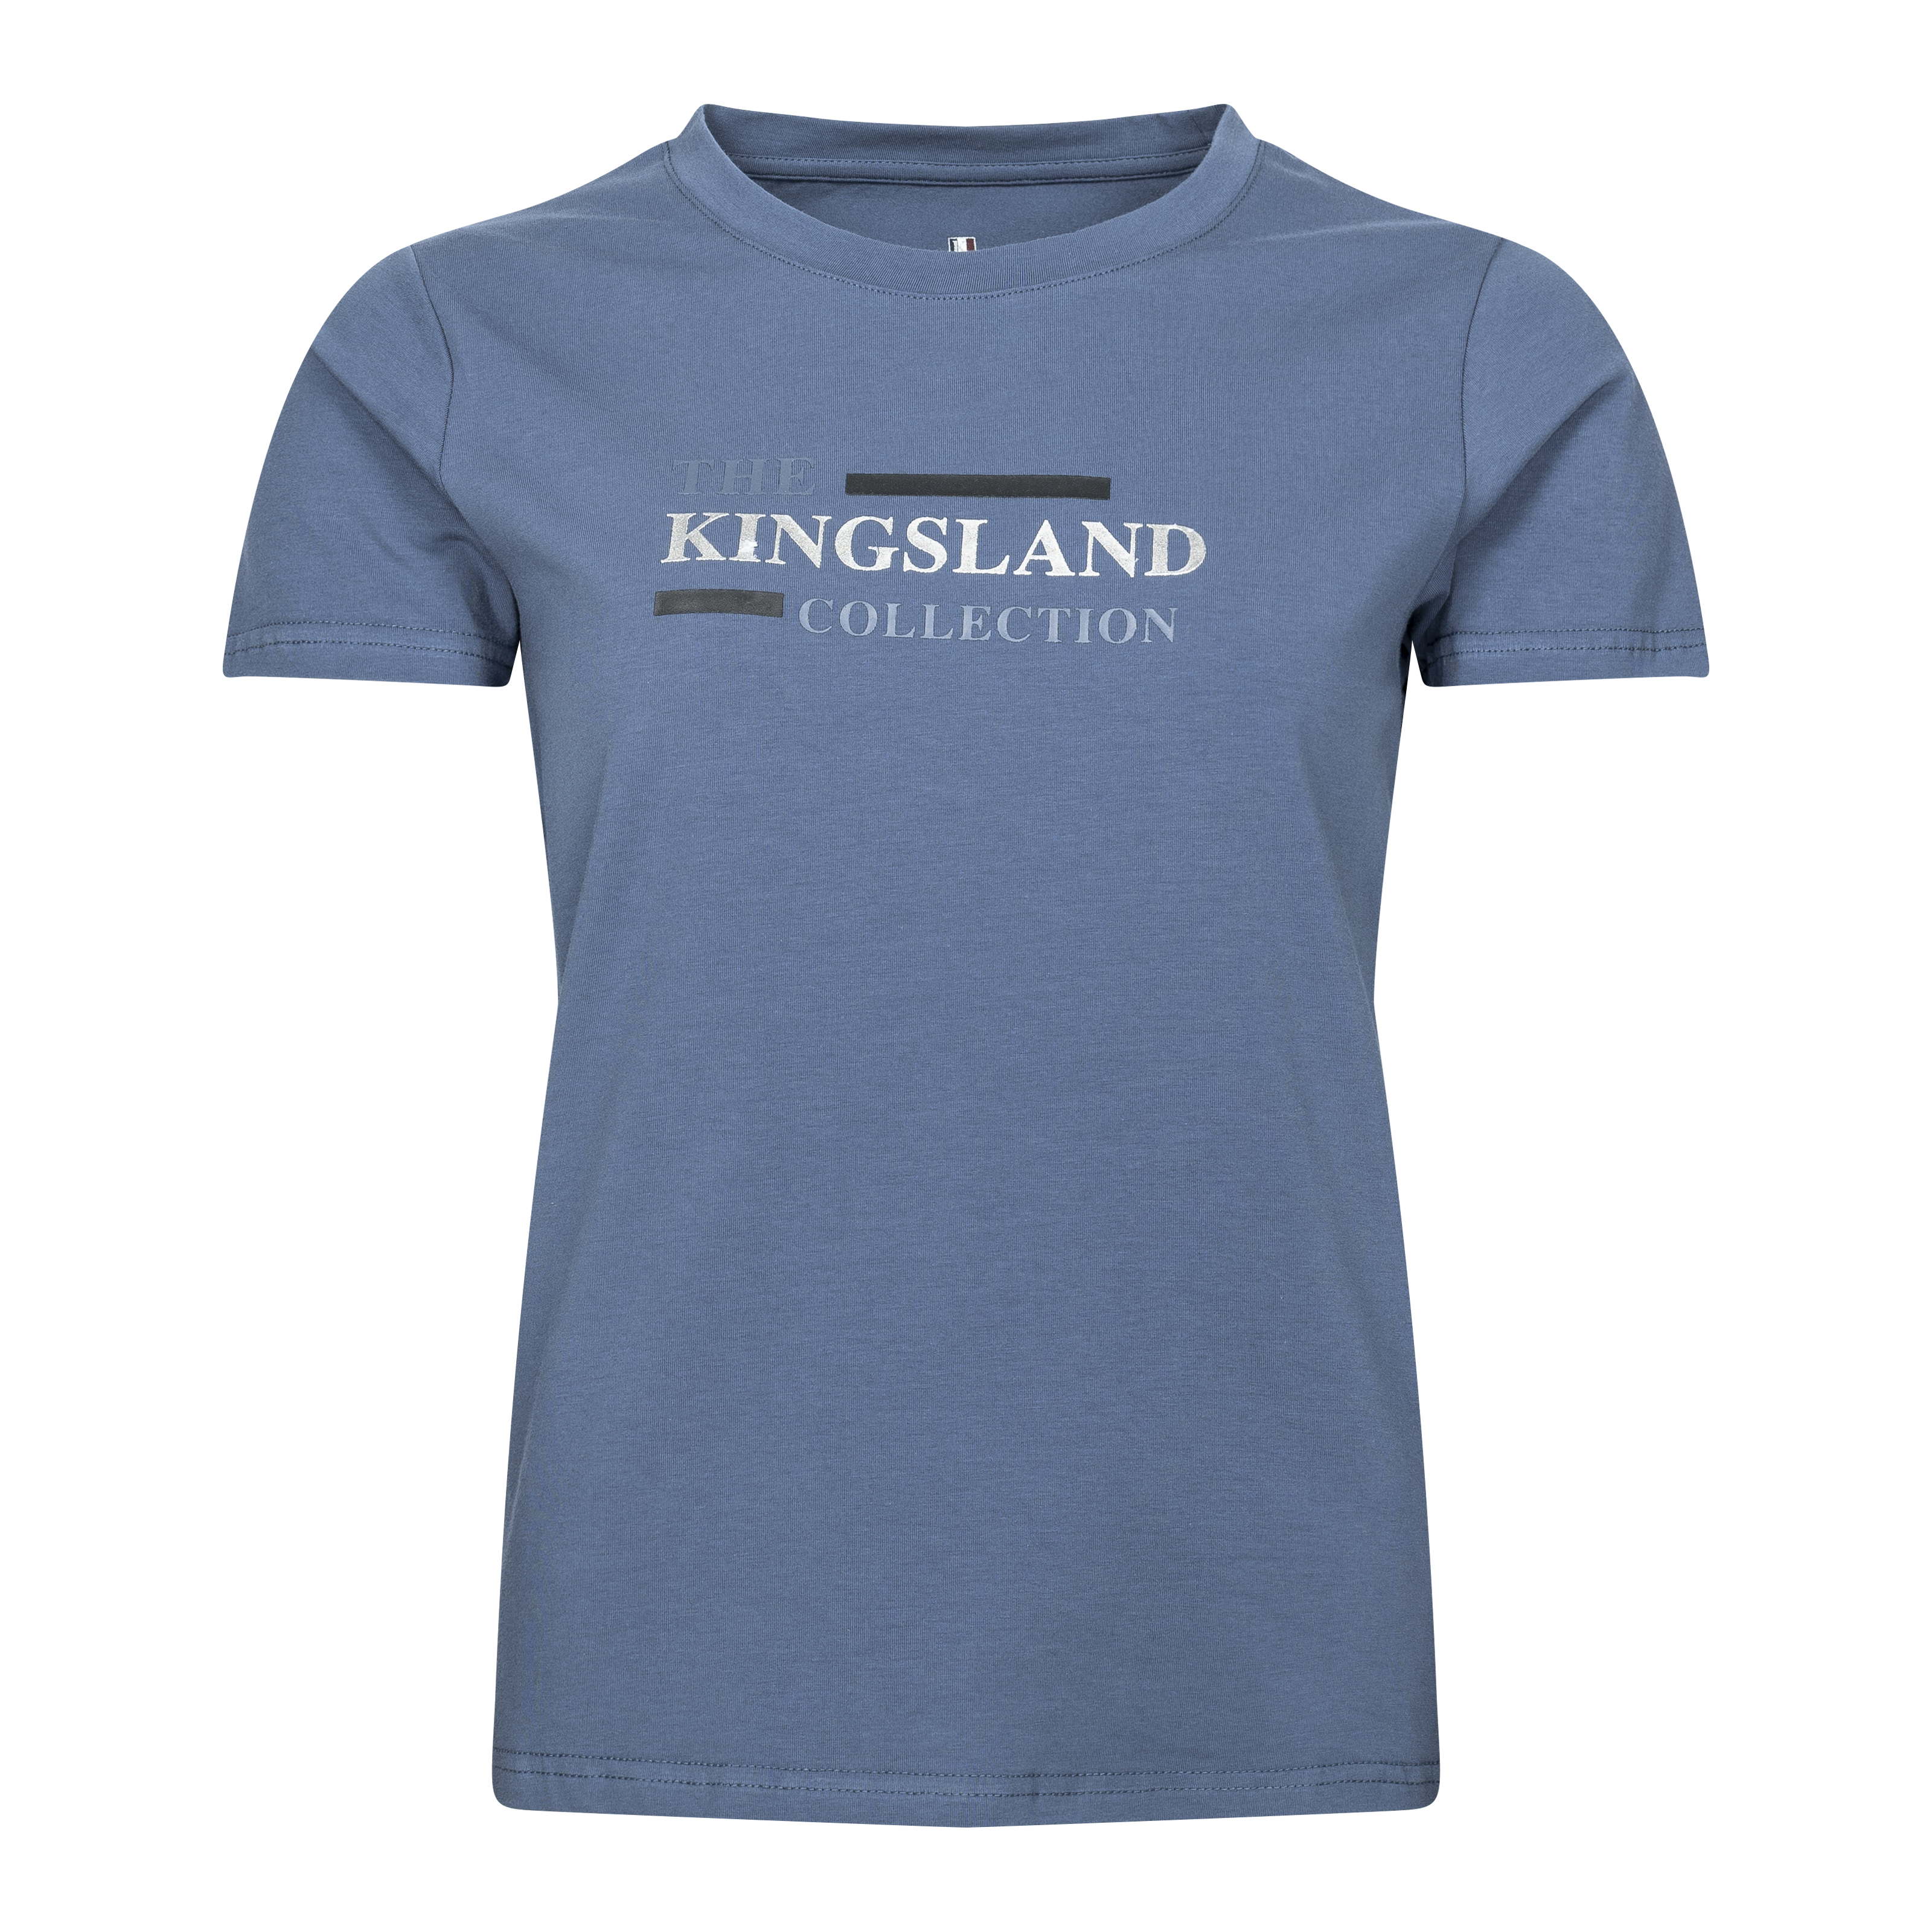 KLbernice T-shirt - Blue Bering Sea